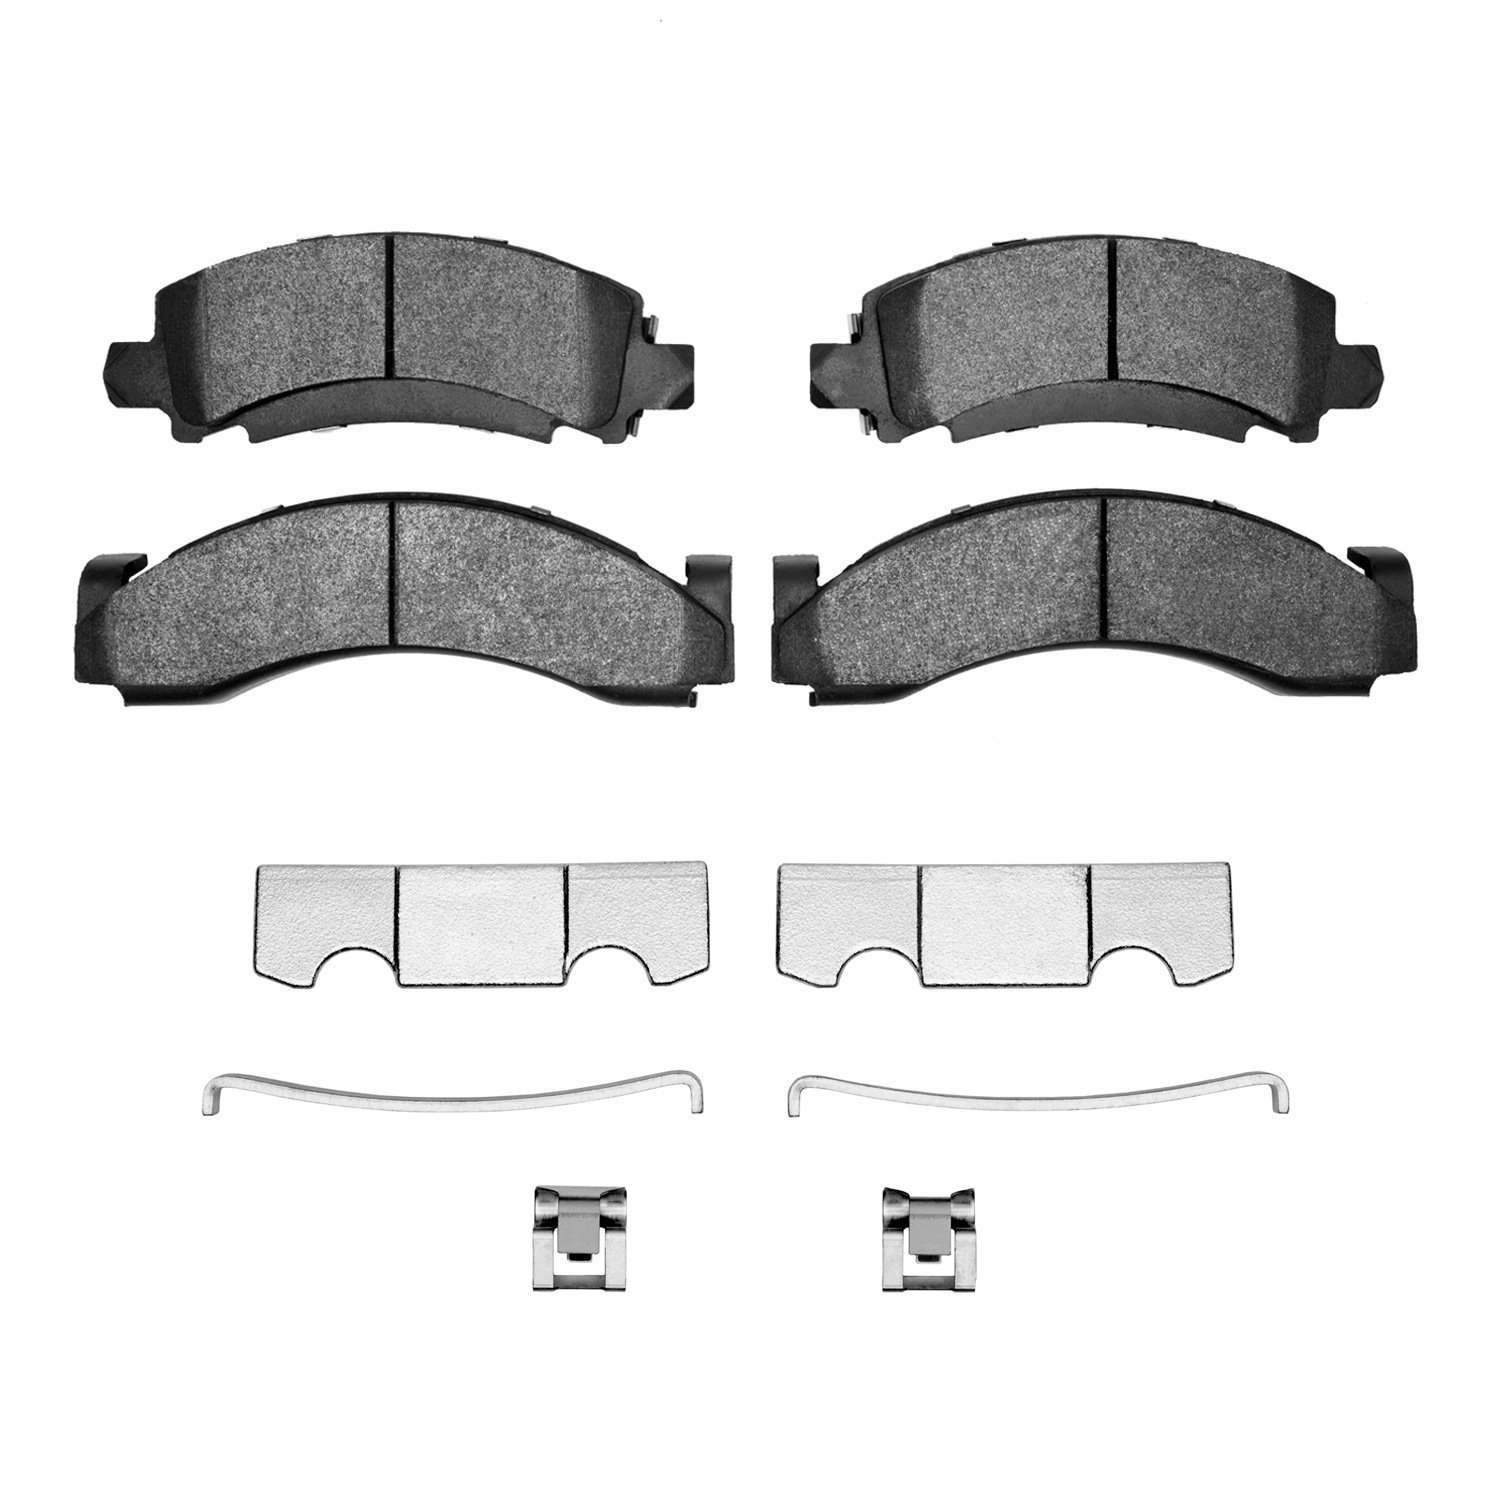 Semi-Metallic Brake Pads & Hardware Kit, 1971-2005 Fits Multiple Makes/Models, Position: Front & Rear